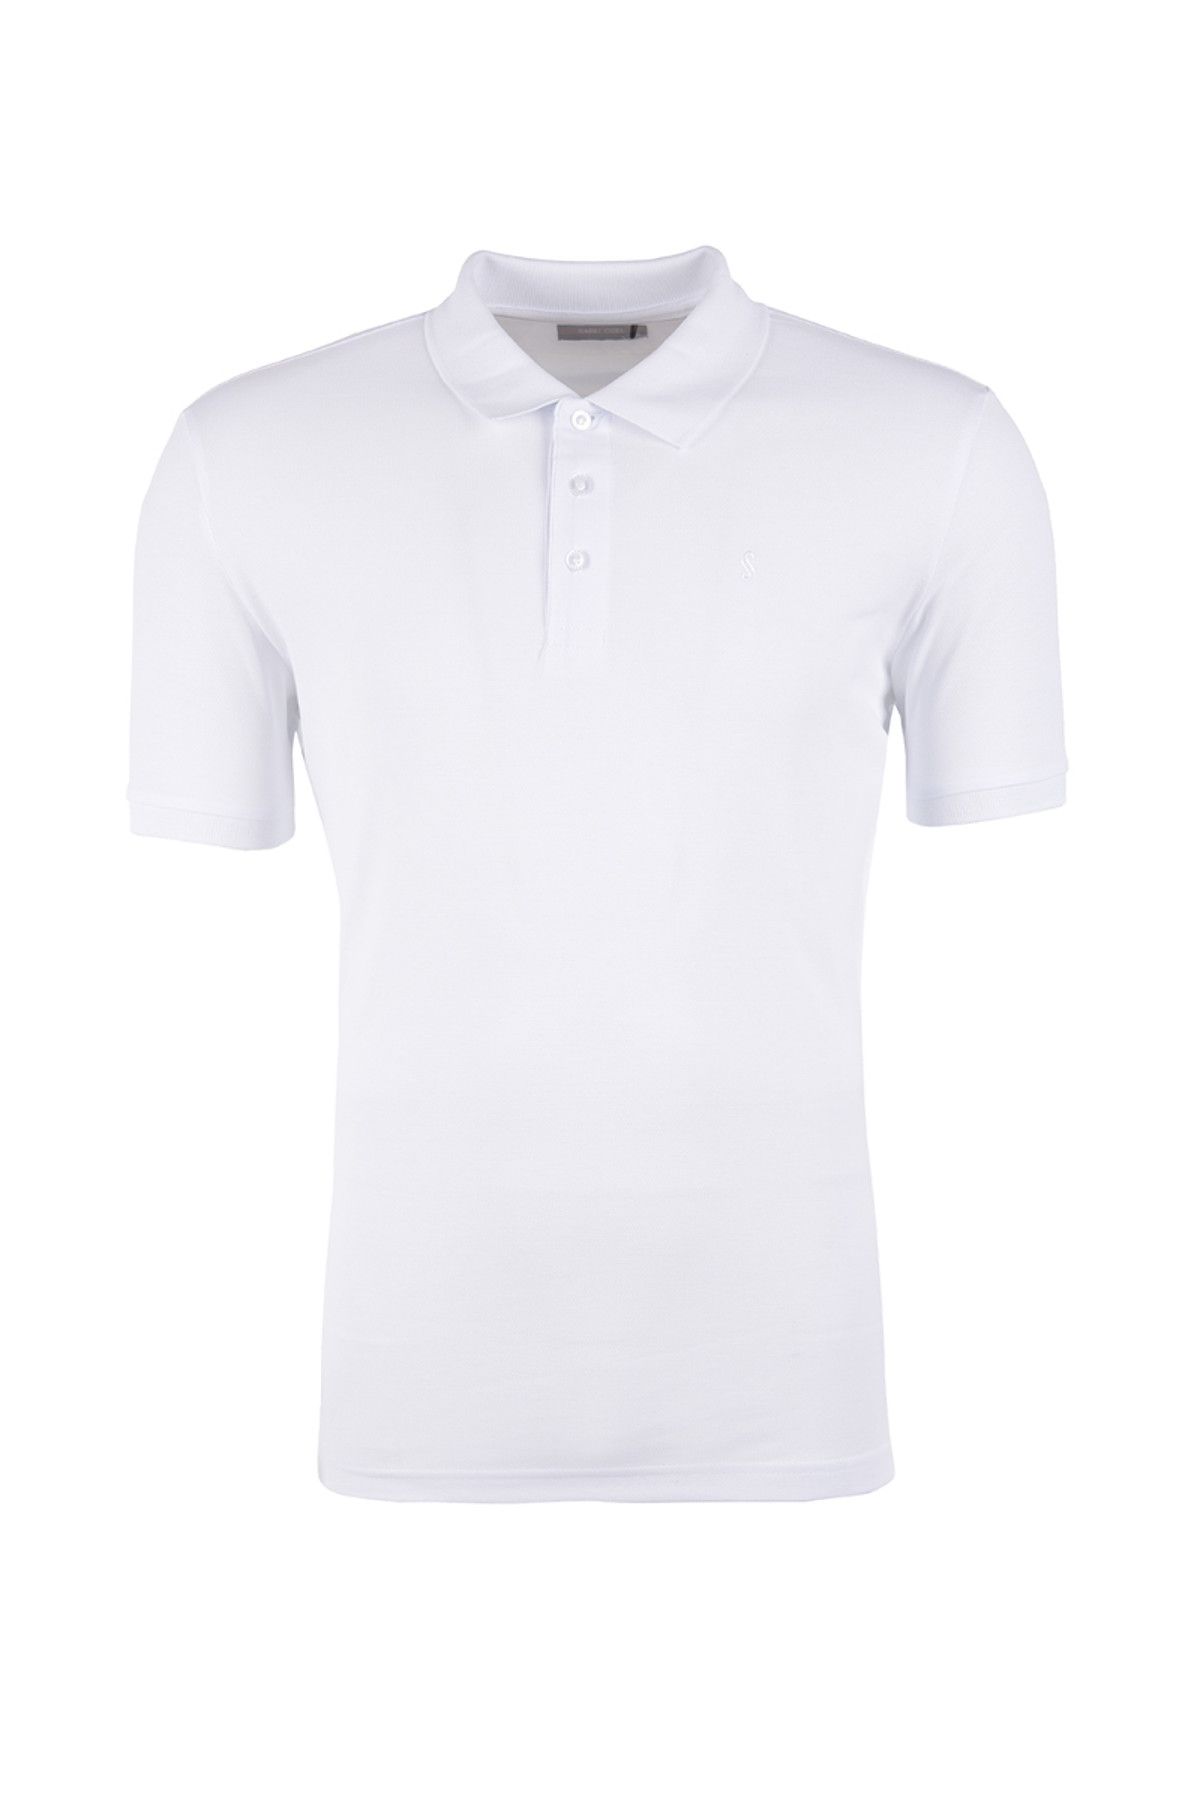 Sabri Özel Erkek Beyaz T-Shirt - 3S81178437000